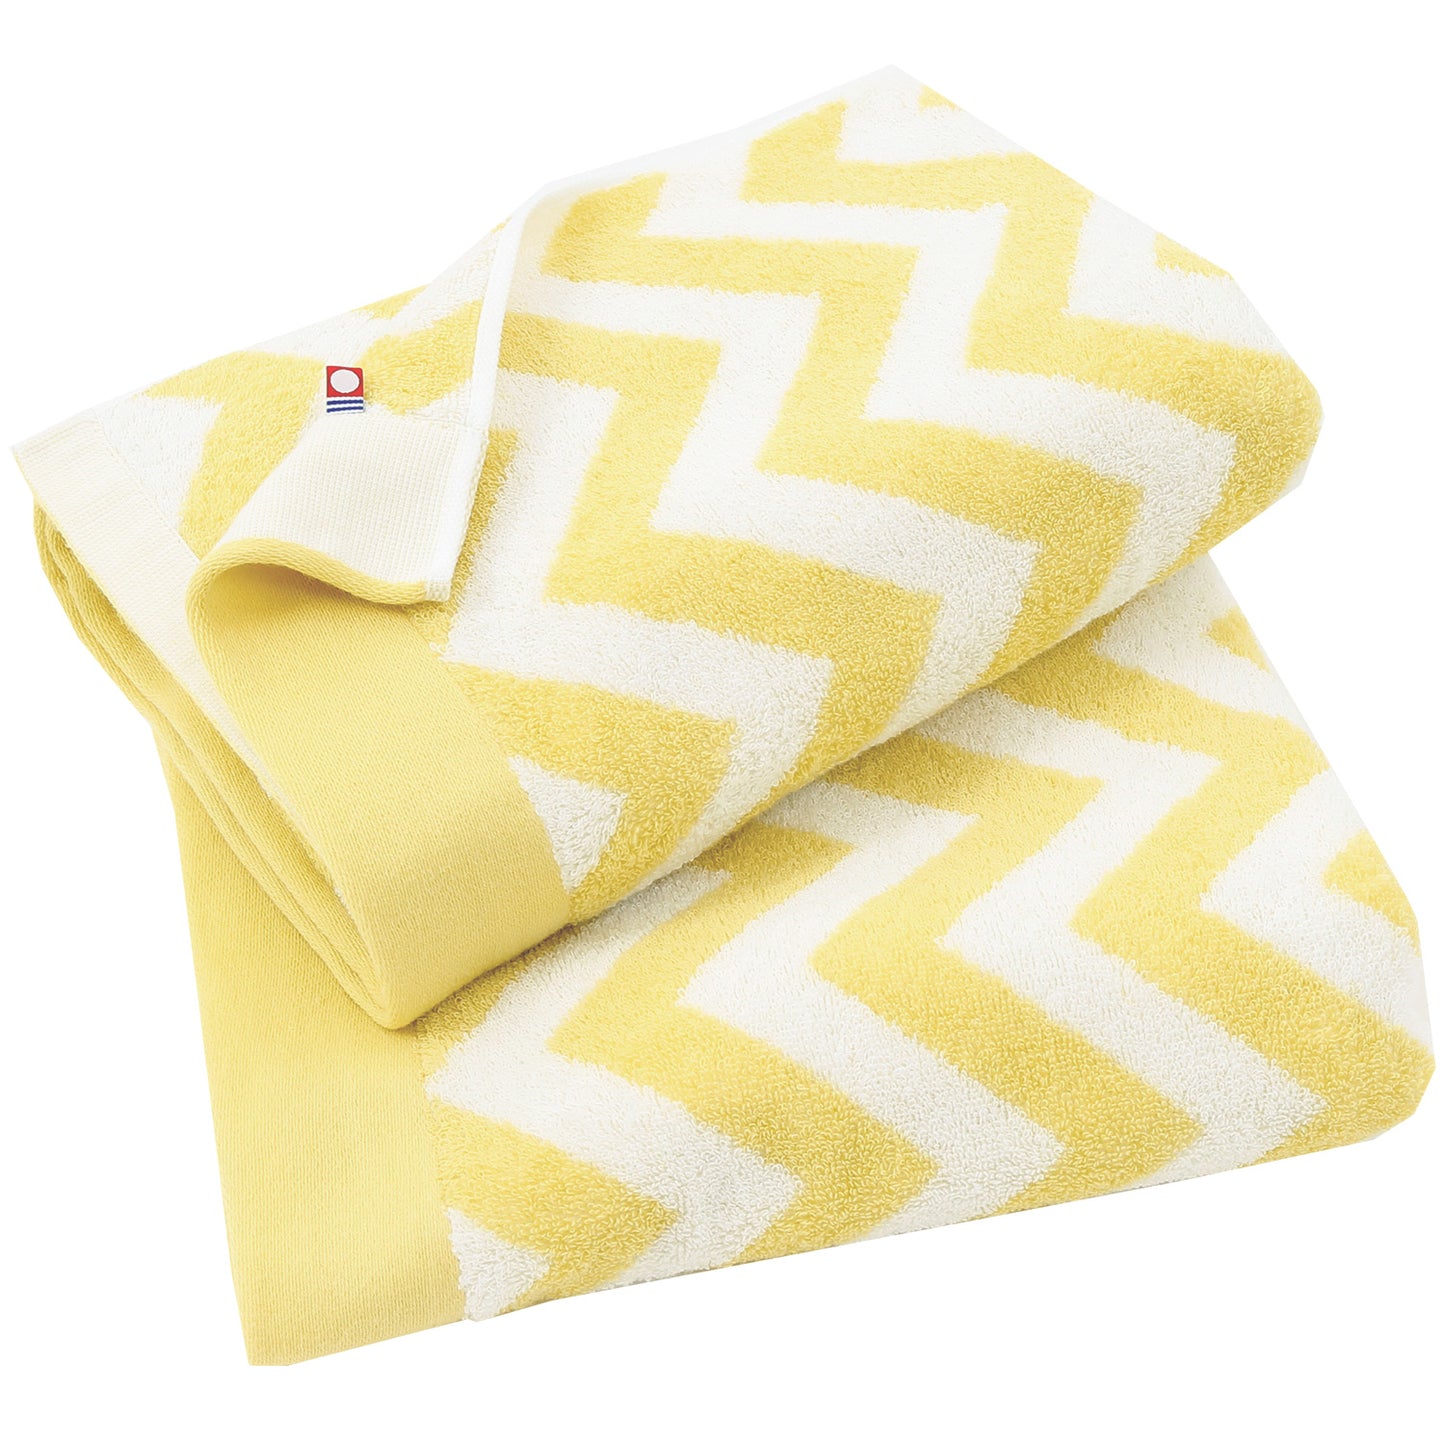 Hiorie Imabari Towel Modern Nordic Fluffy Bath Towel 2 Sheets 100% cotton  Japan